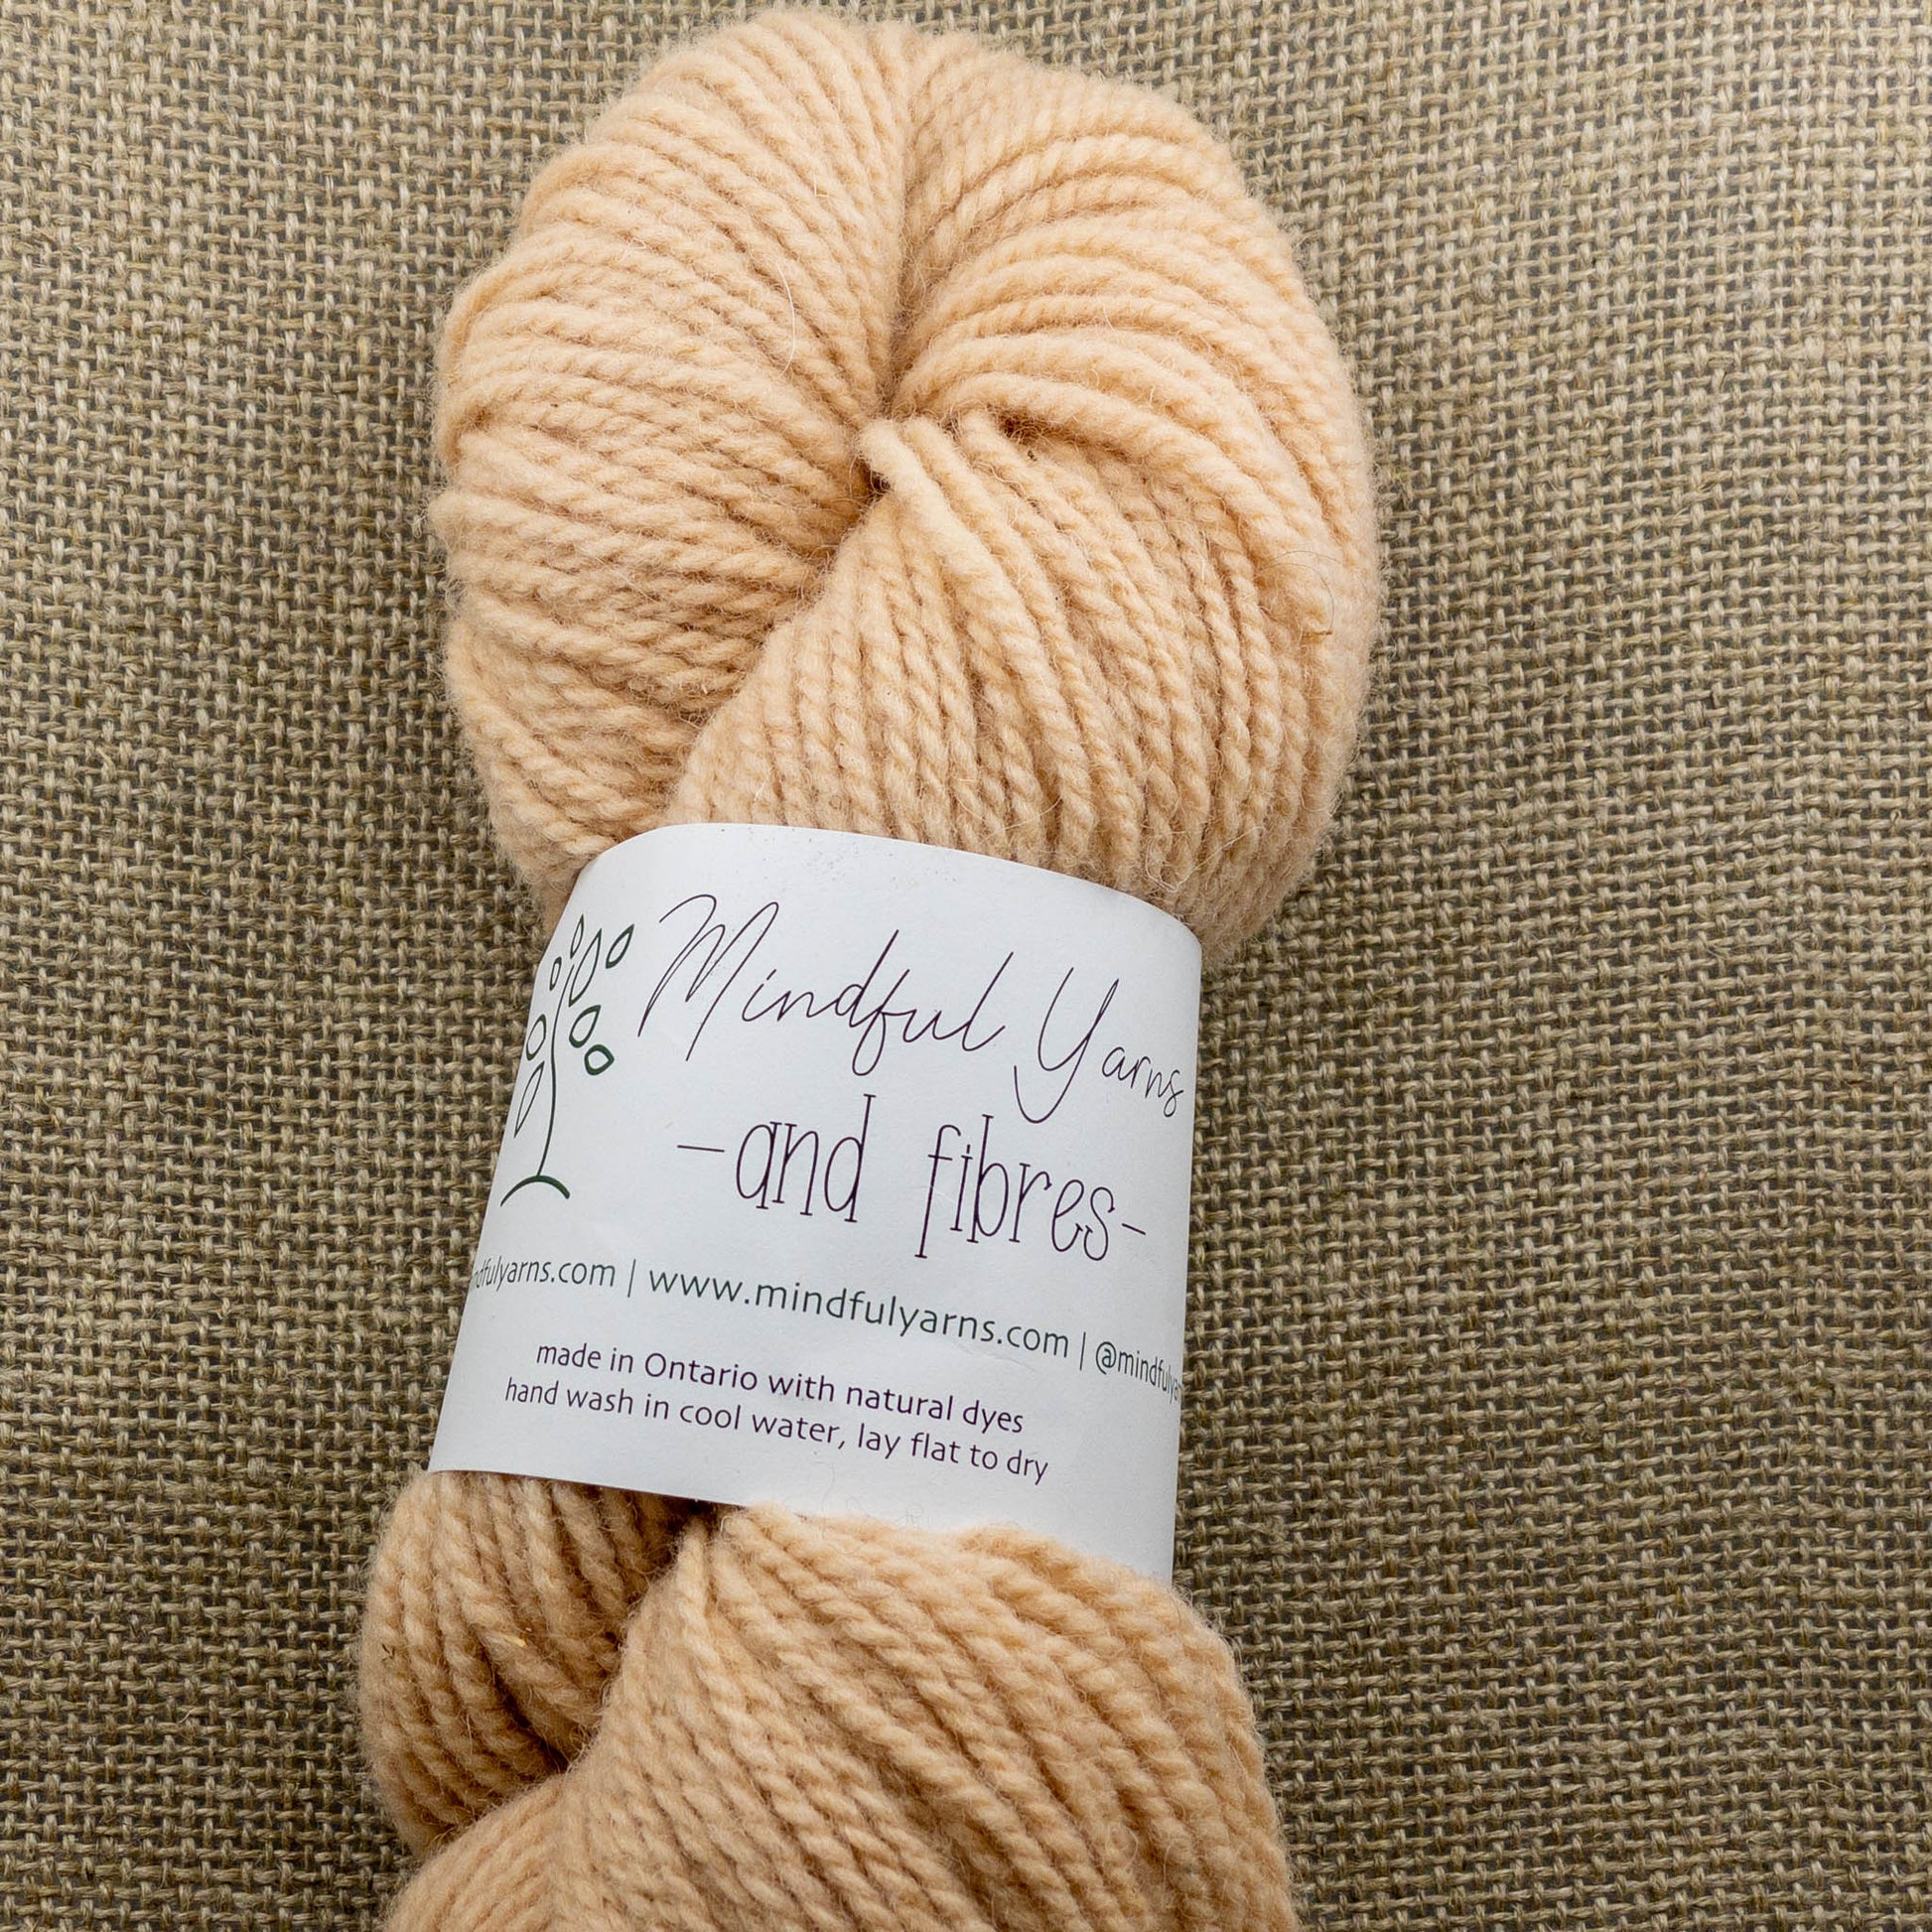 Ontario Dorset Wool - worsted weight - Mindful Yarns - Avocado